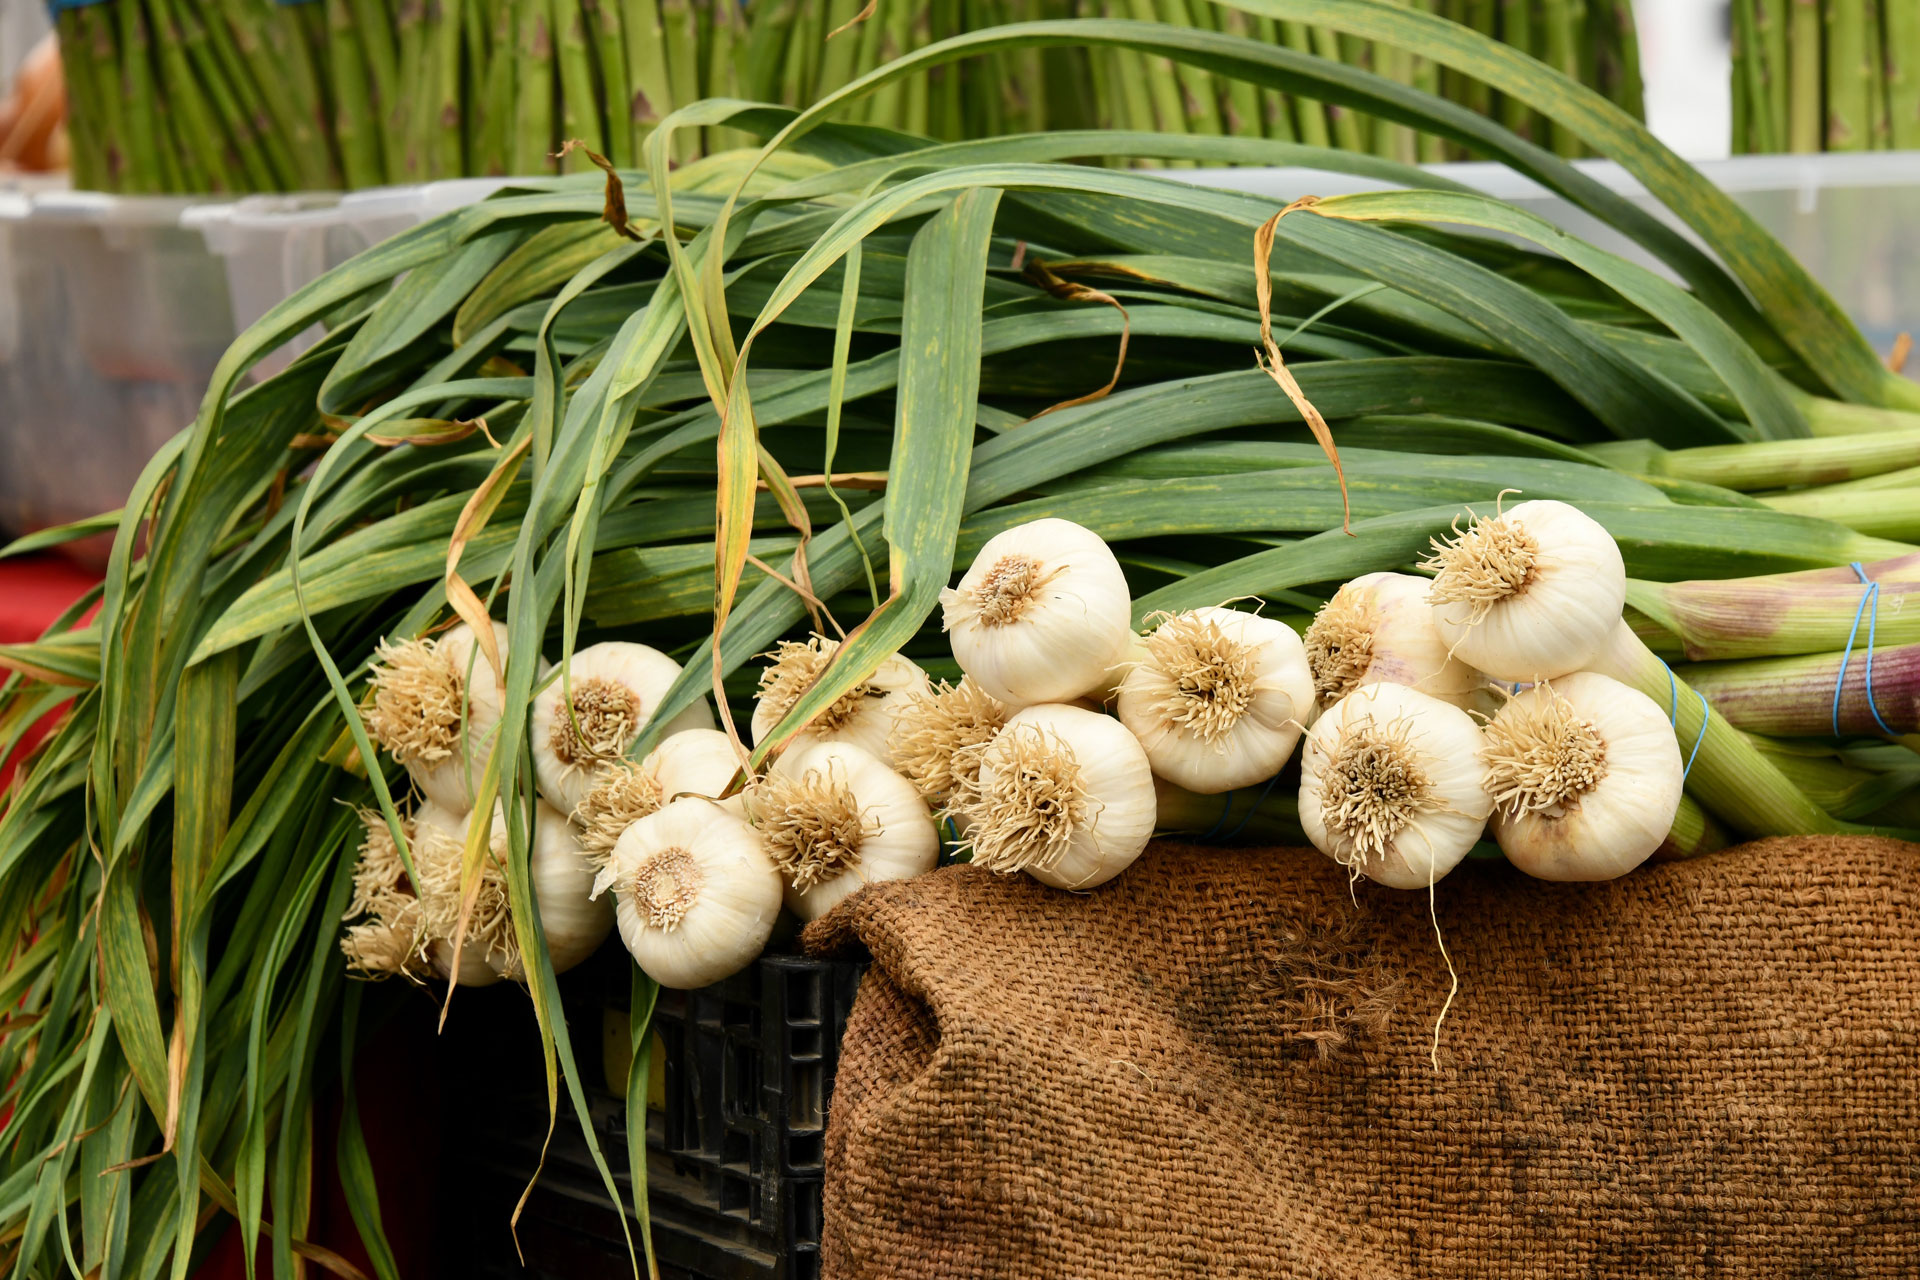 Ingredient of the Week: Garlic